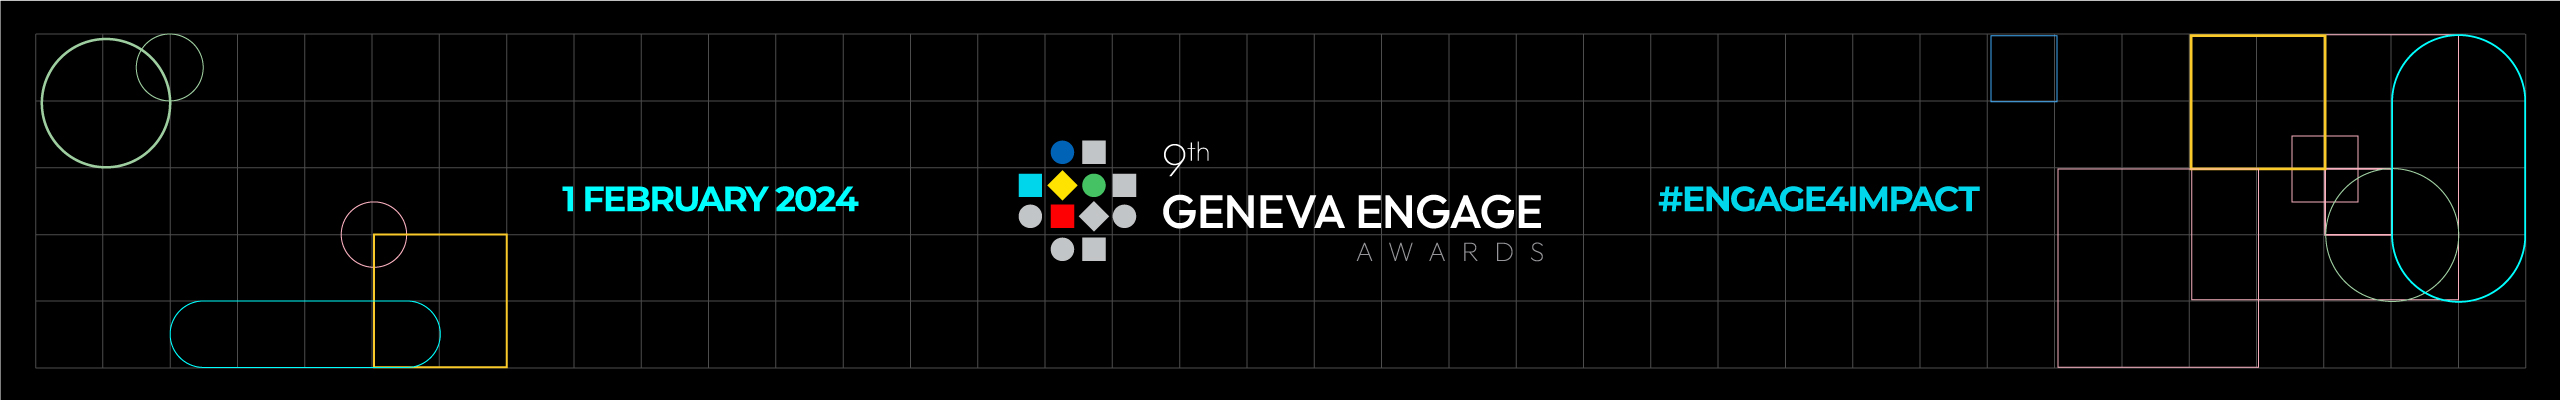 Geneva Engage banner